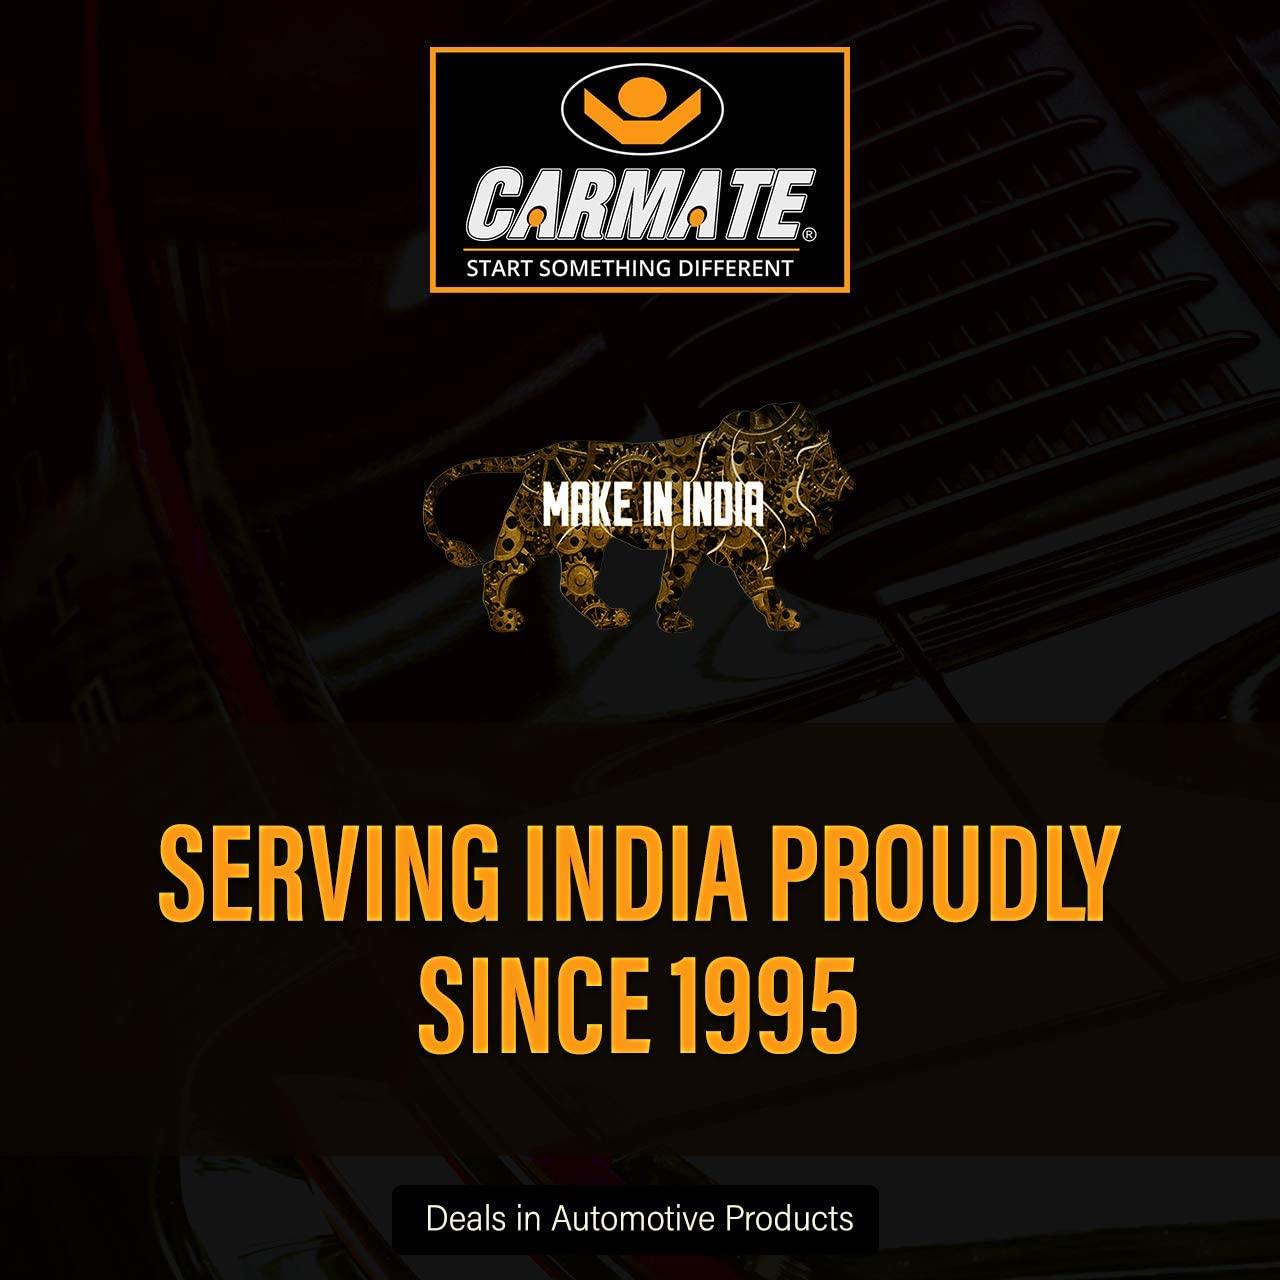 Carmate Passion Car Body Cover (Black and Orange) for Mahindra - Xylo - CARMATE®